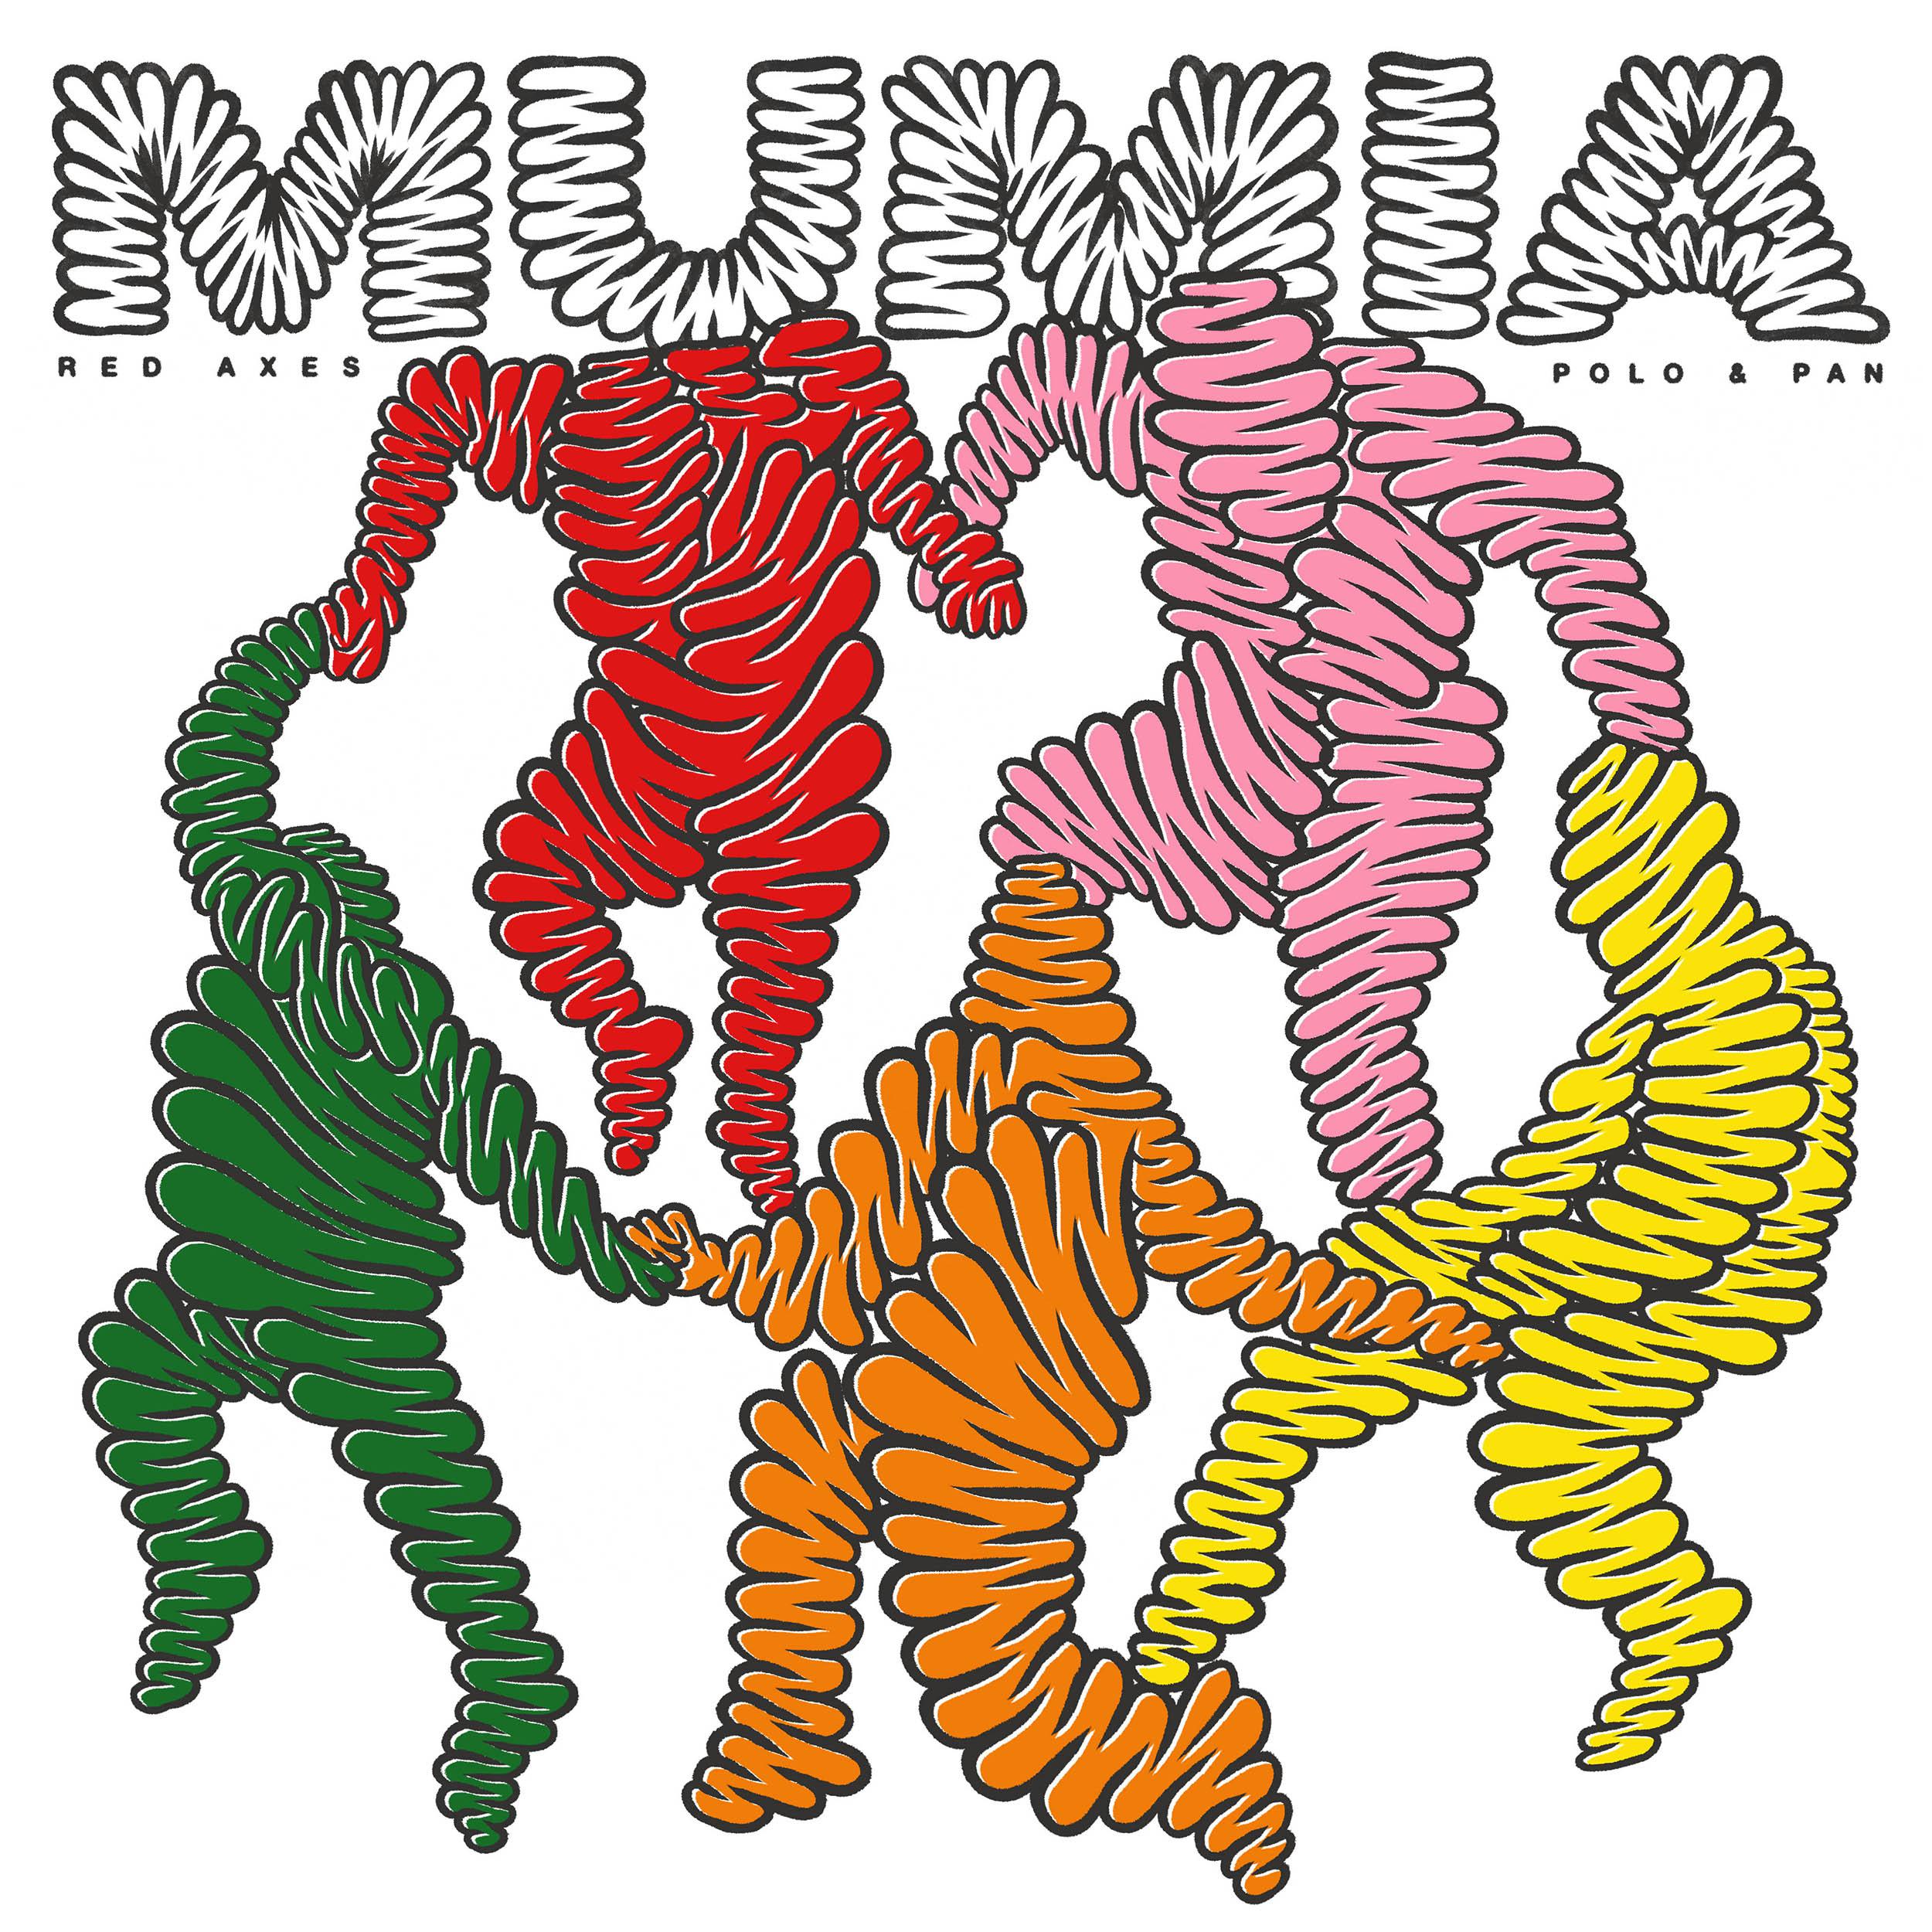 Постер альбома Mumia